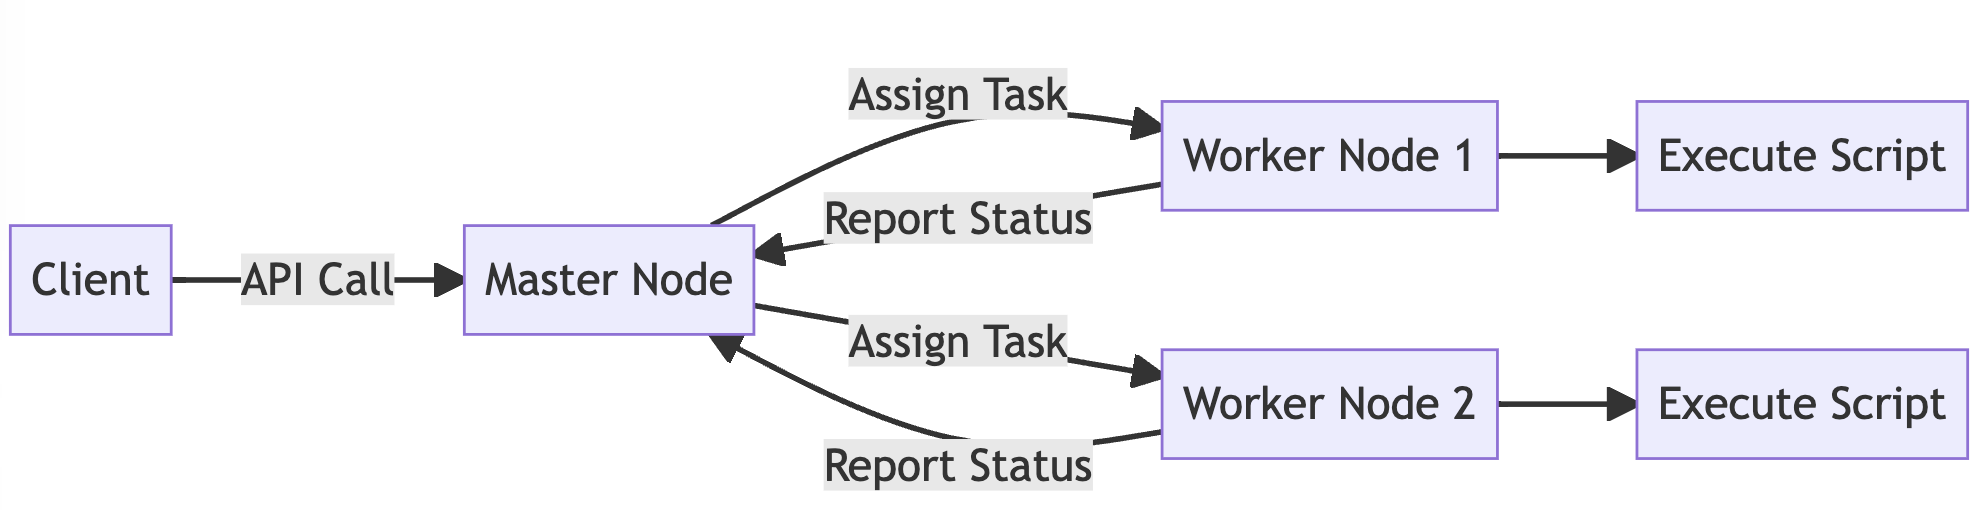 Main Process Diagram